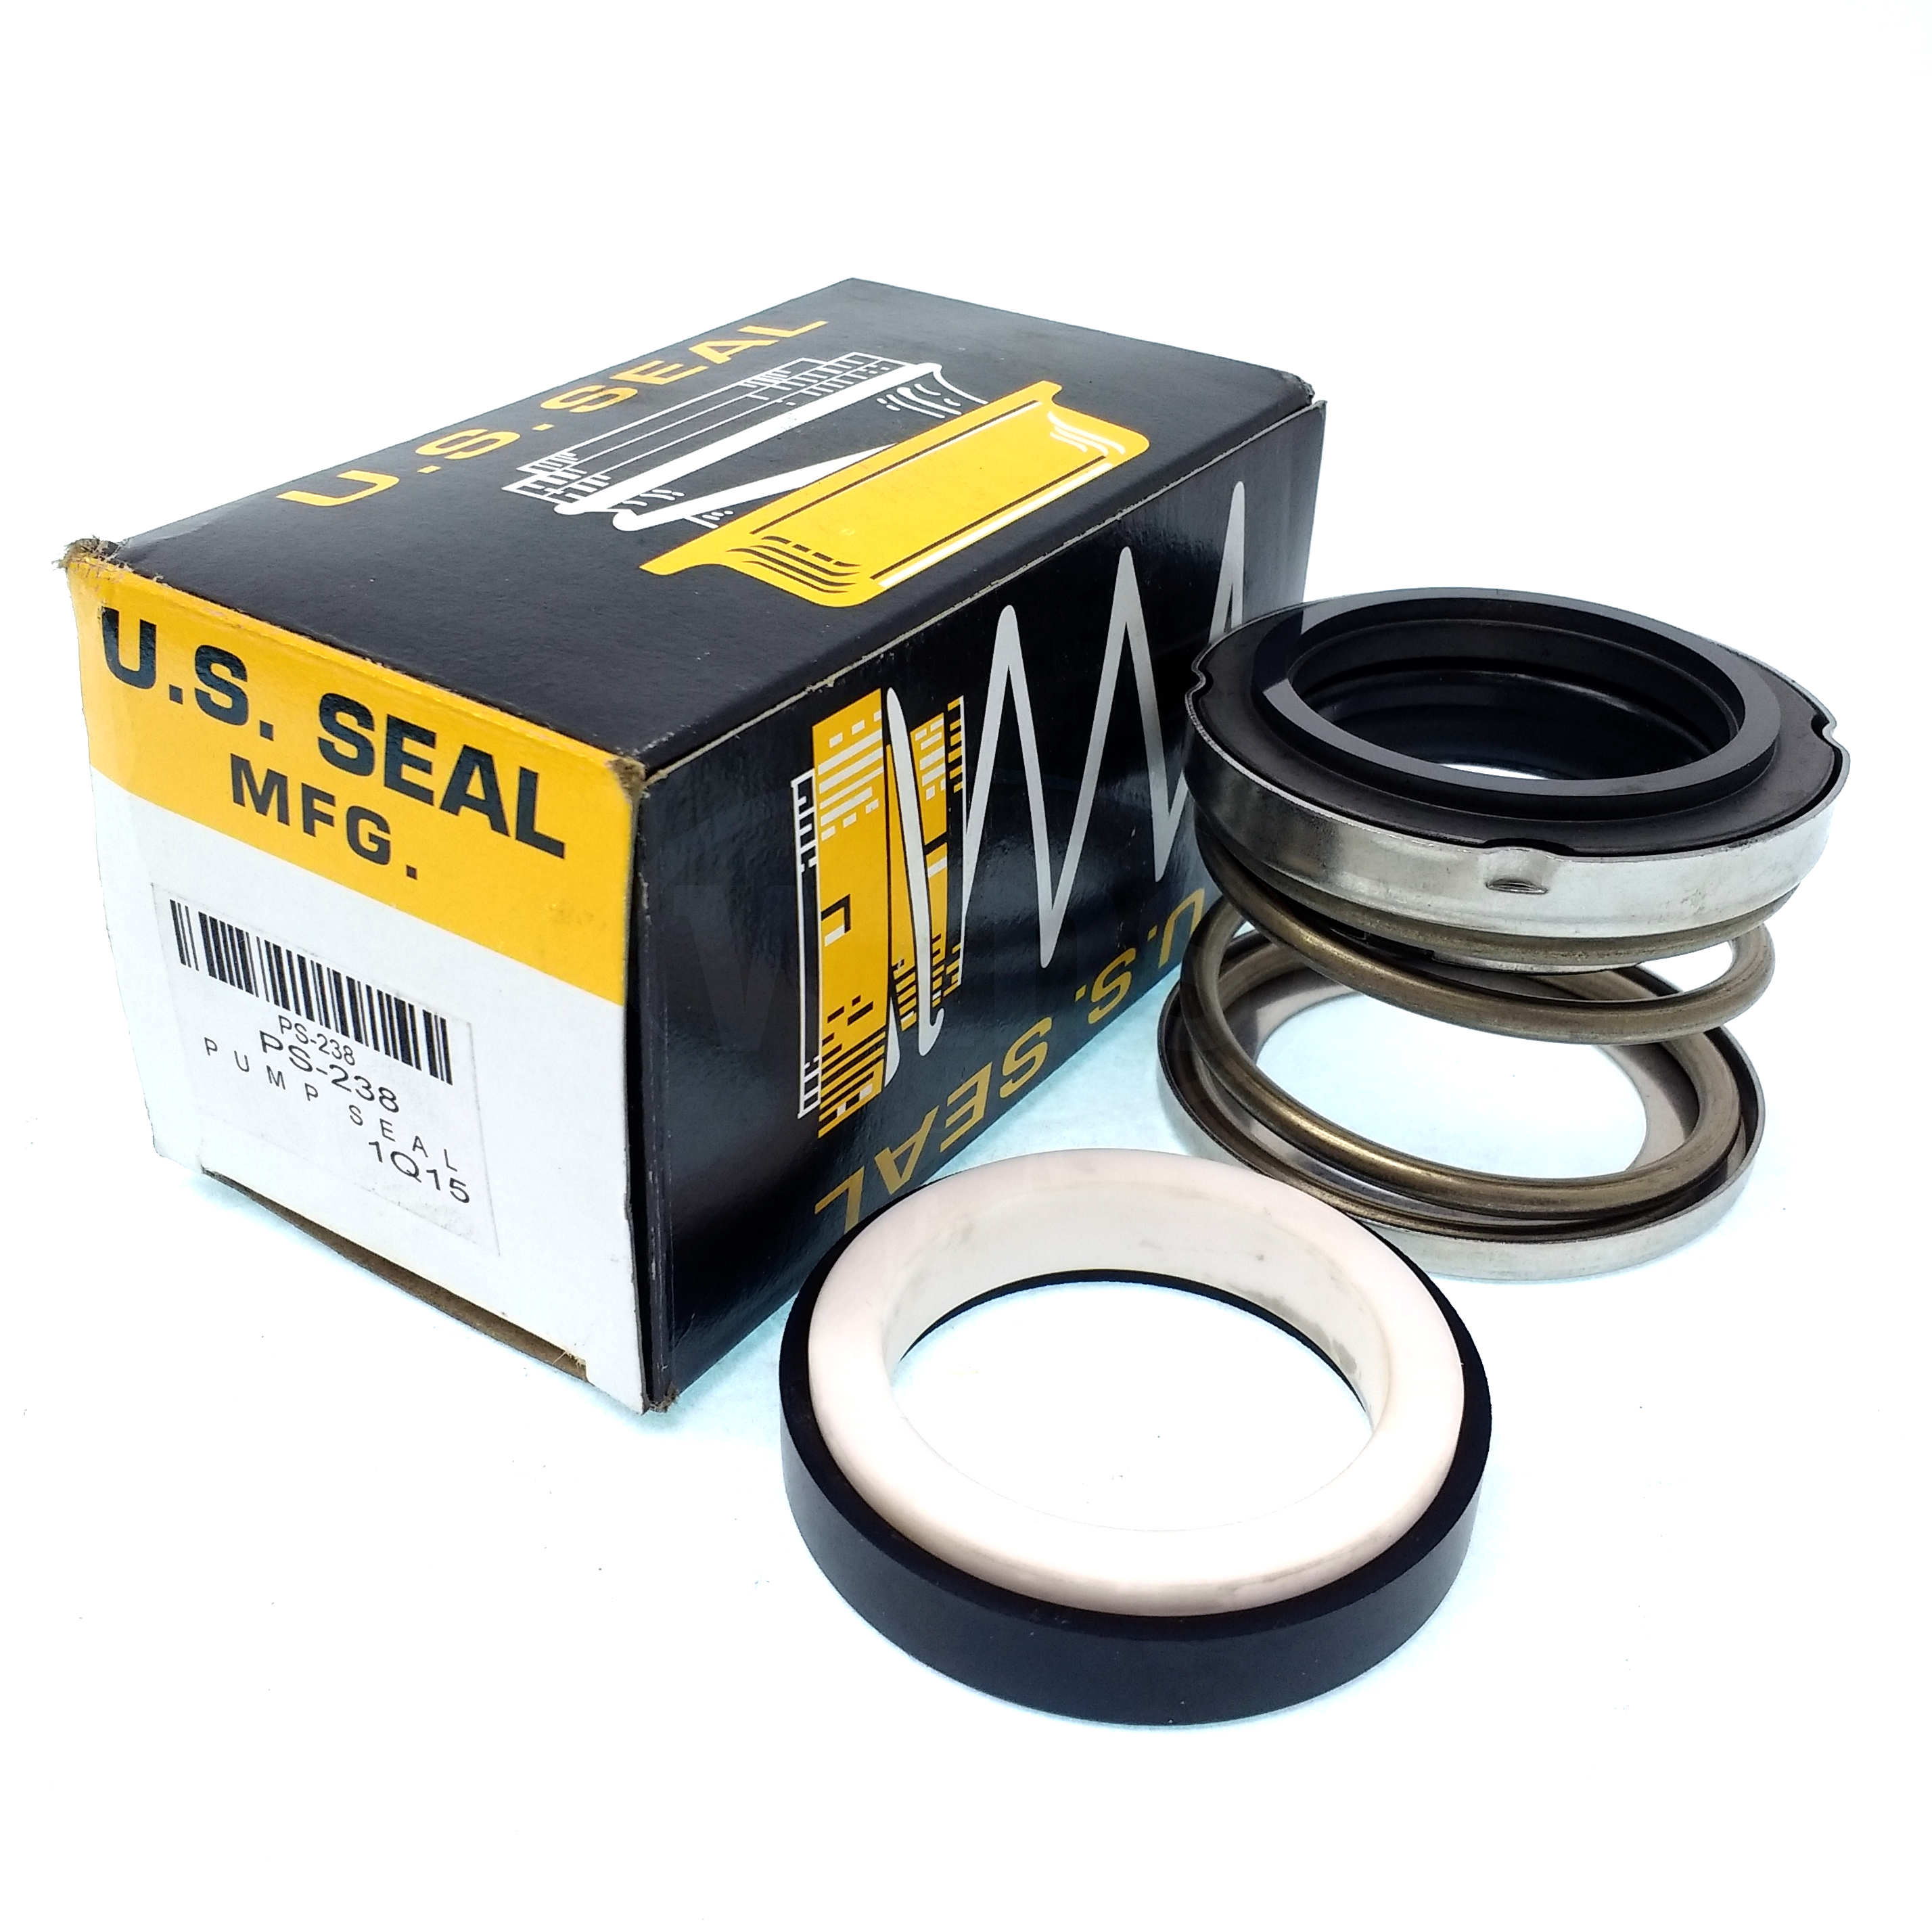 PS-238 U.S. Seal Mfg 1-5/8' Pump Seal (Goulds) 1